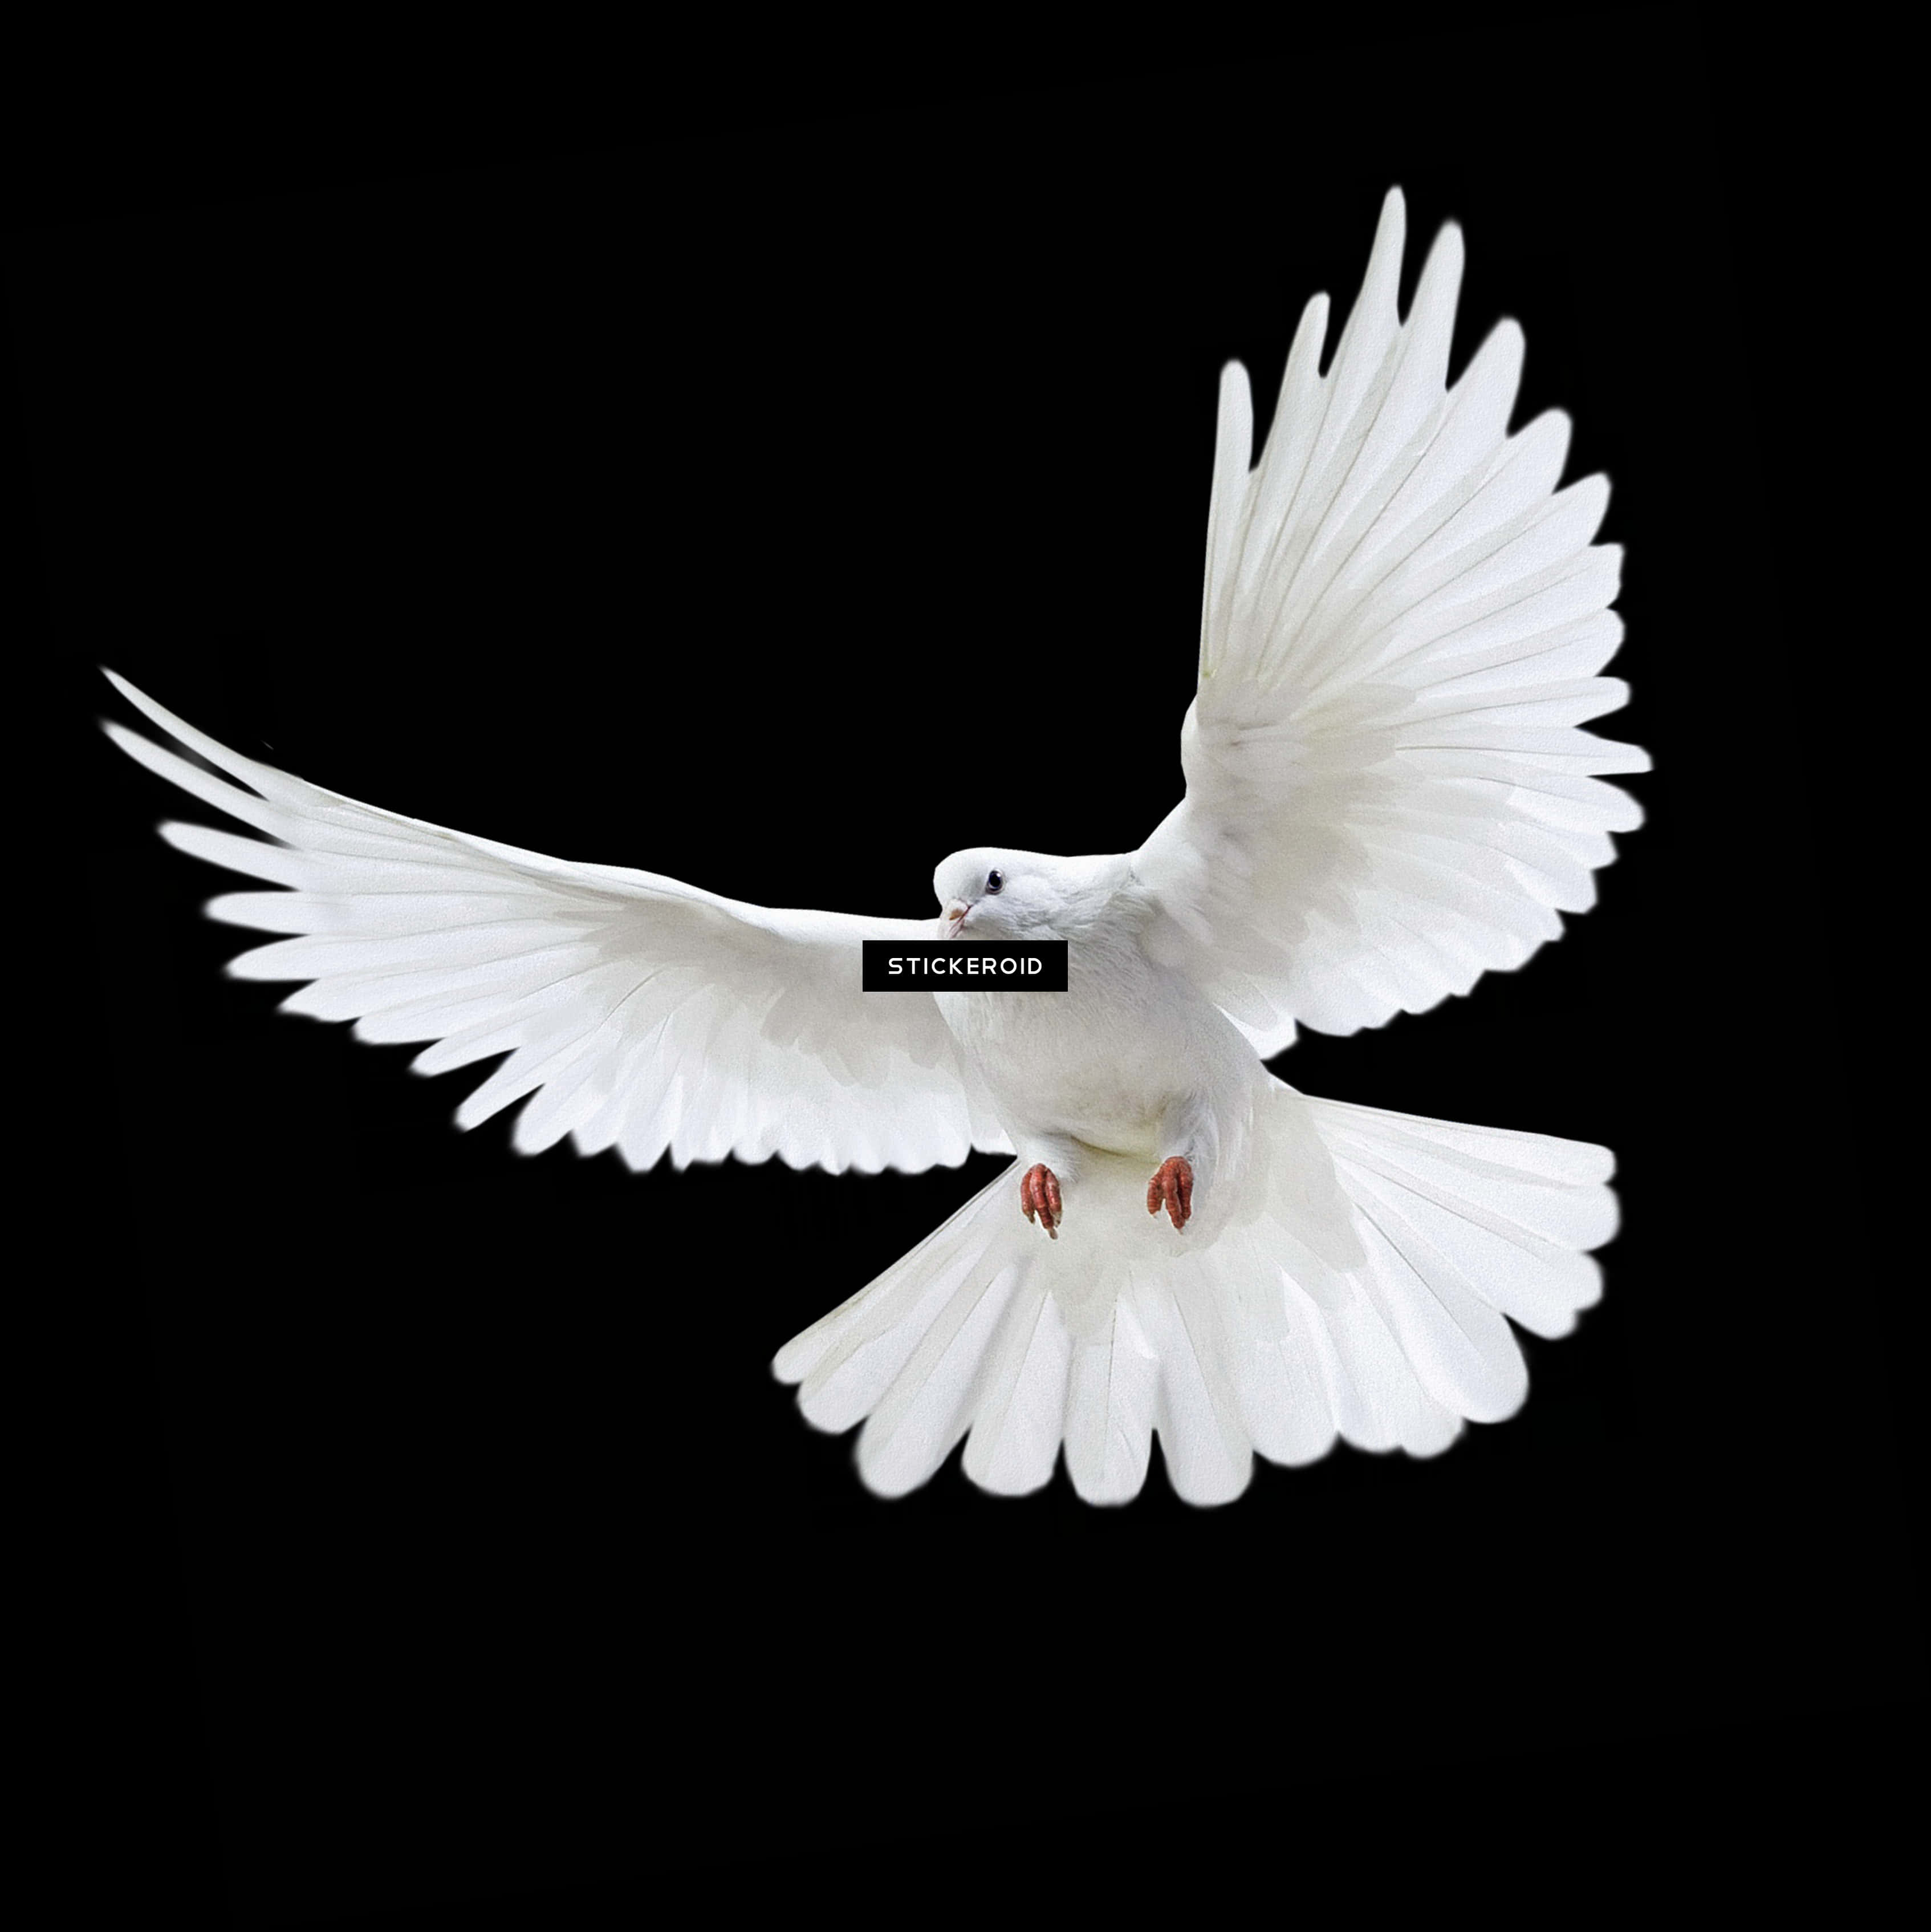 Majestic White Pigeonin Flight PNG